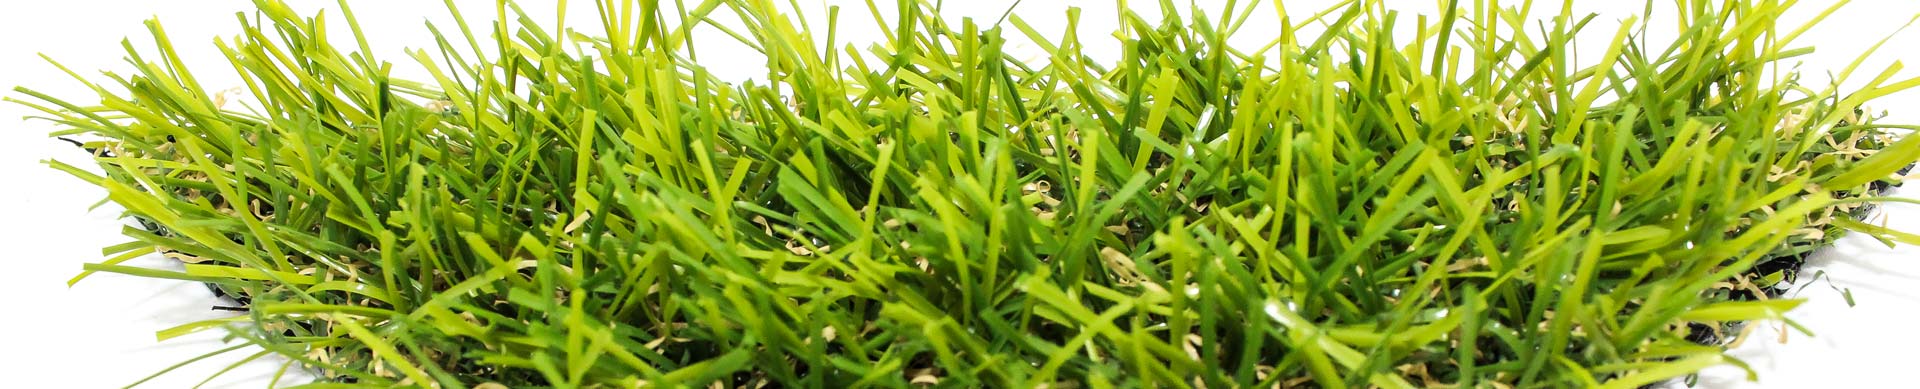 דשא סינתטי מדגם אואזיס